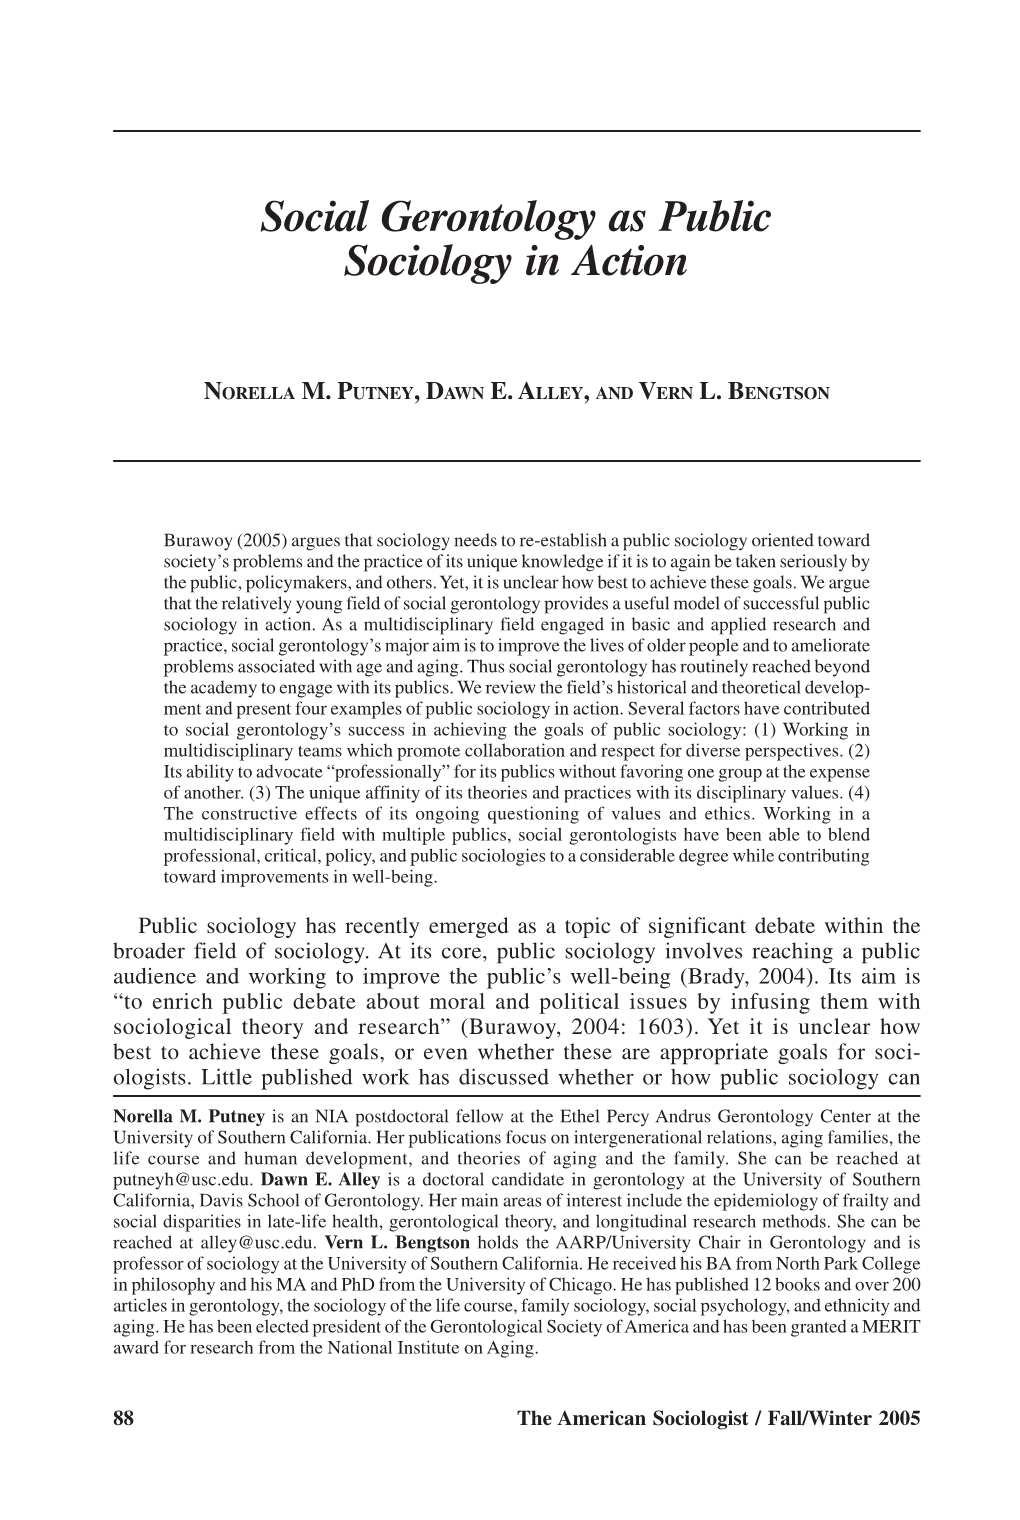 Social Gerontology As Public Sociology in Action